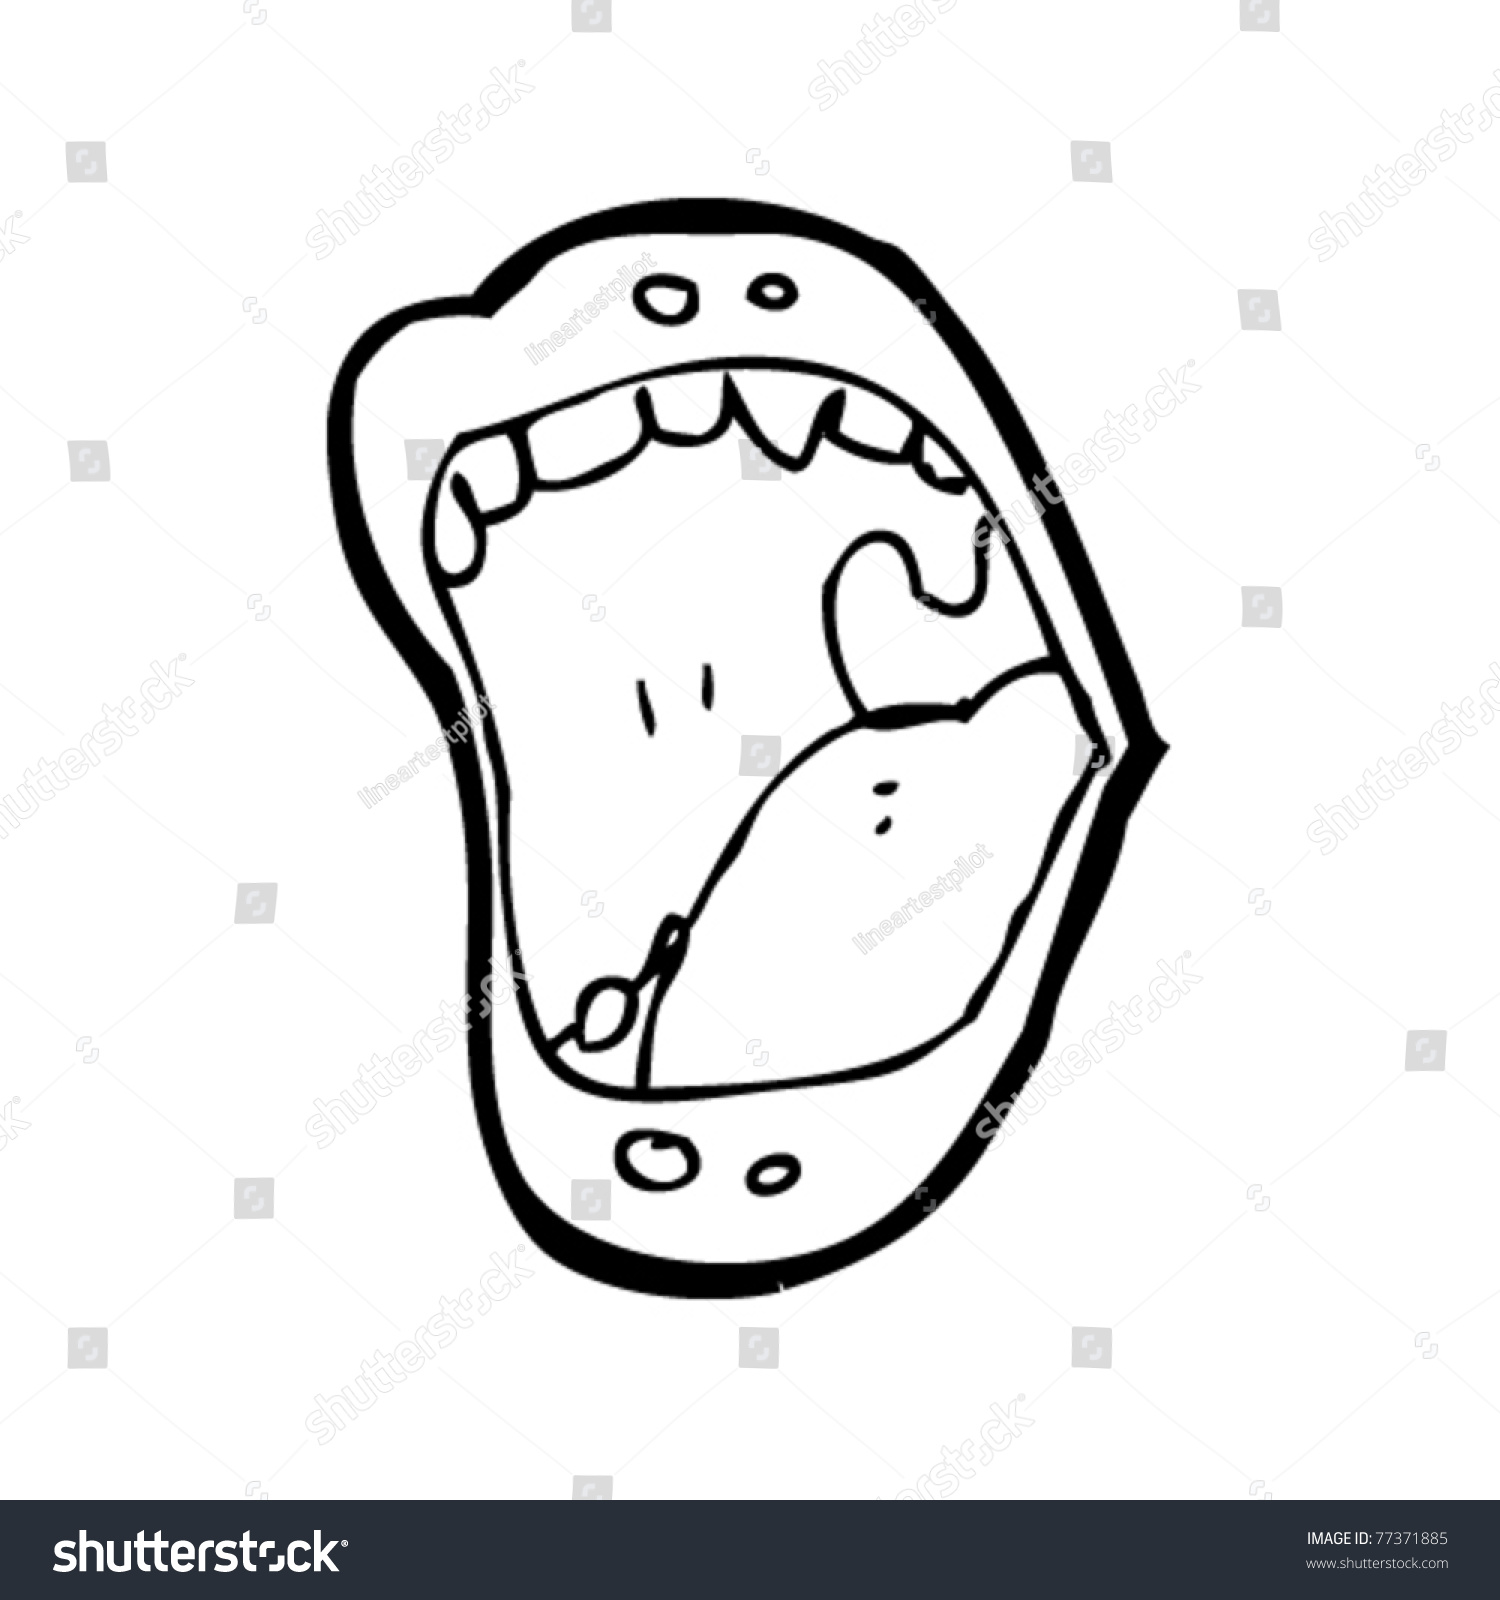 Screaming Mouth Cartoon Stock Vector 77371885 Shutterstock